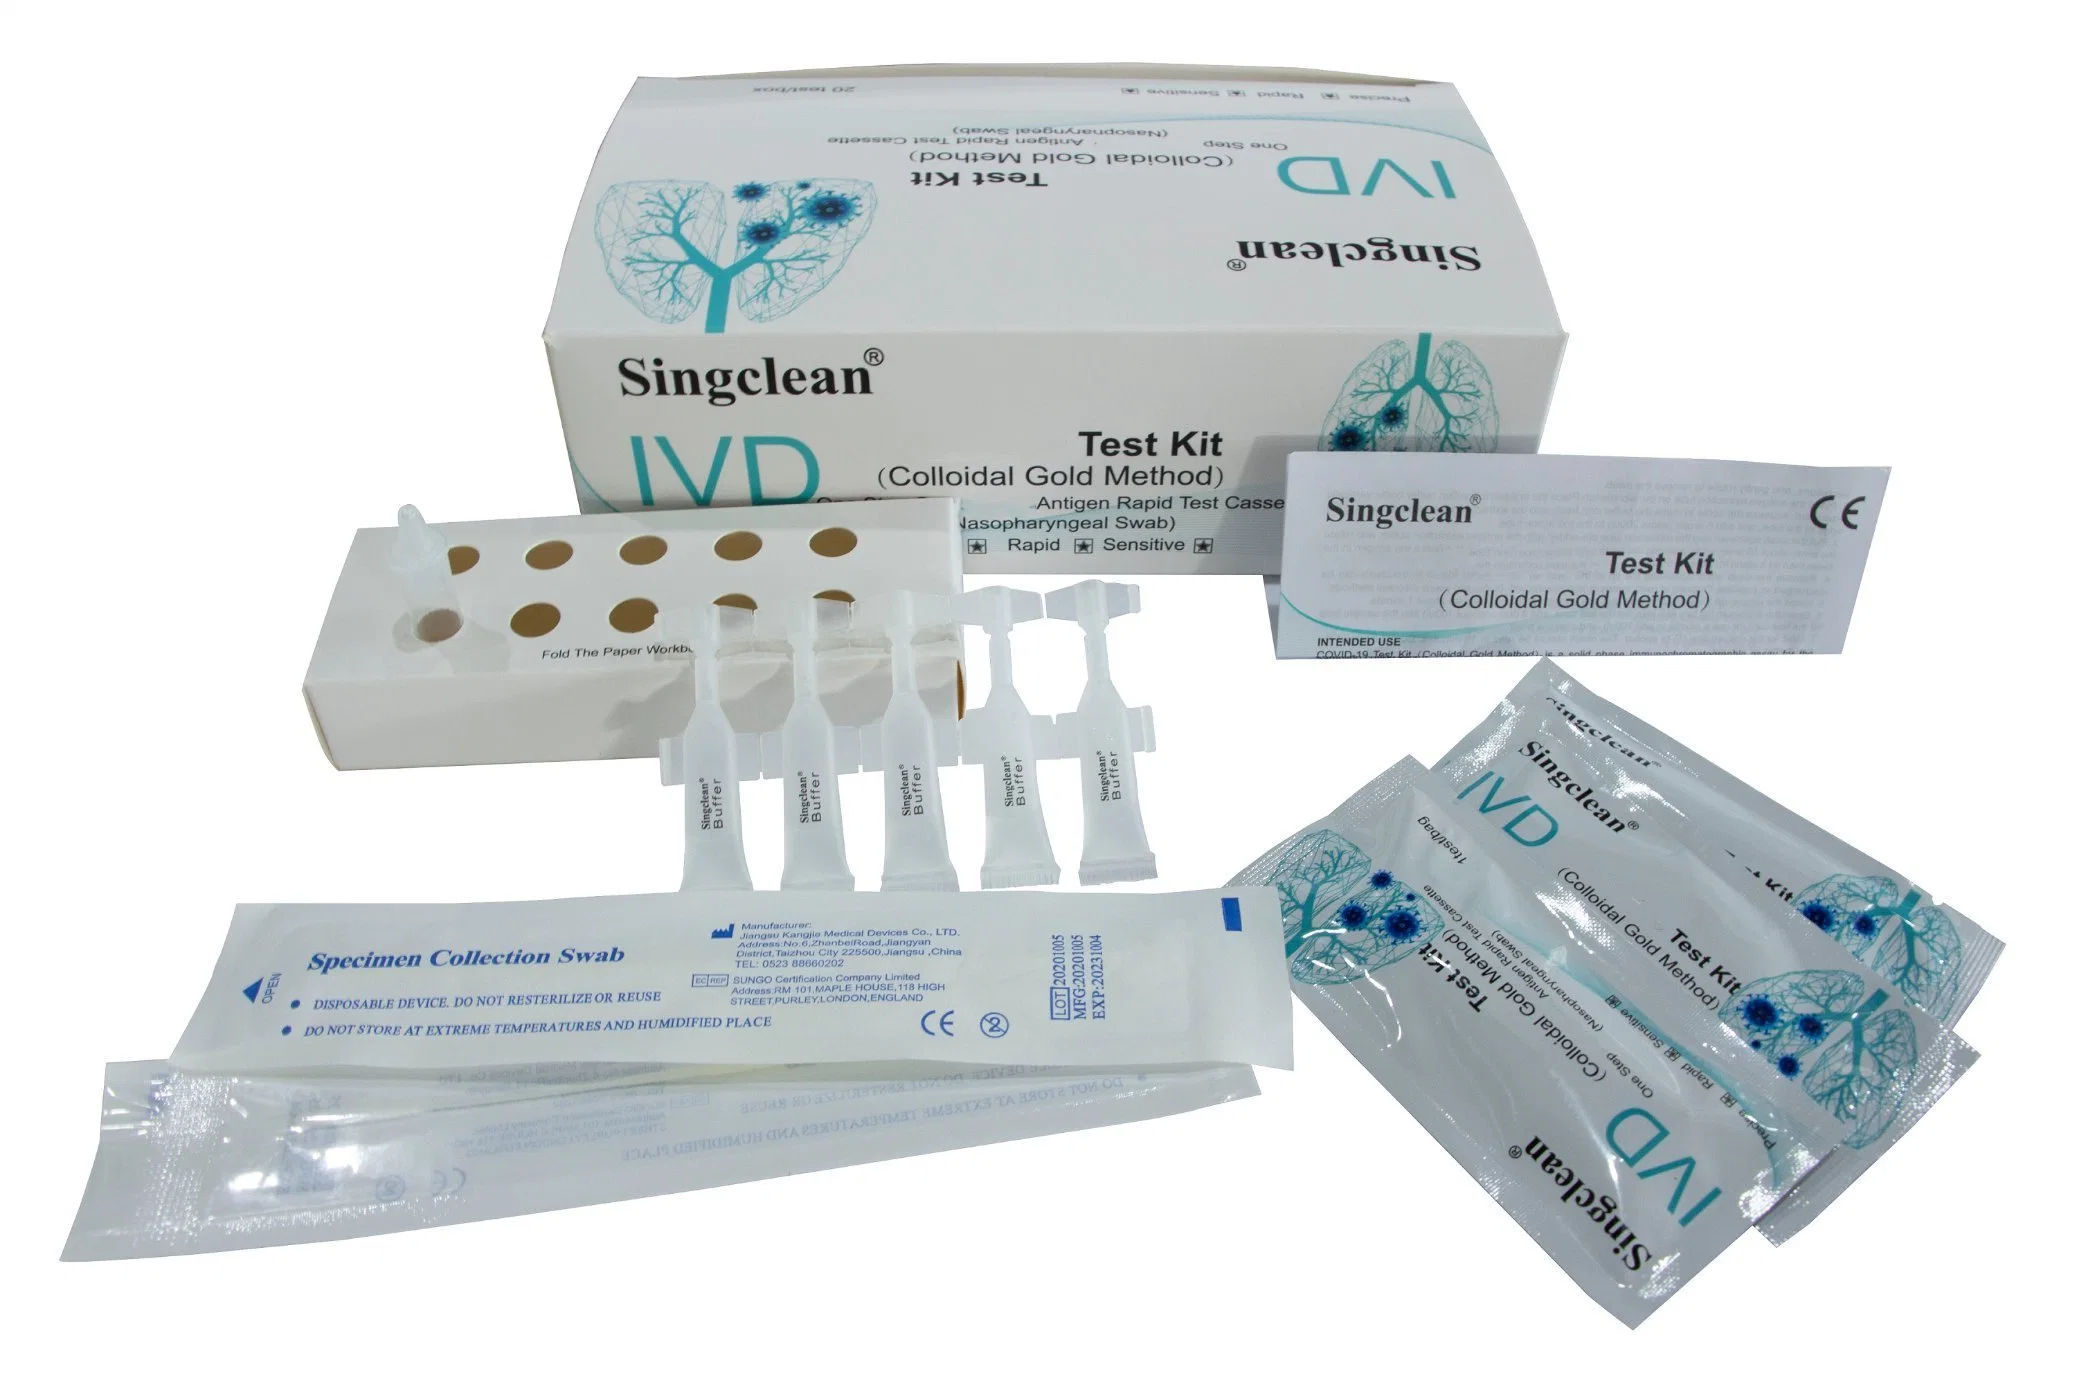 Igg Singclean Anticorpo Igm Kit de Teste de diagnóstico rápido com a marca CE